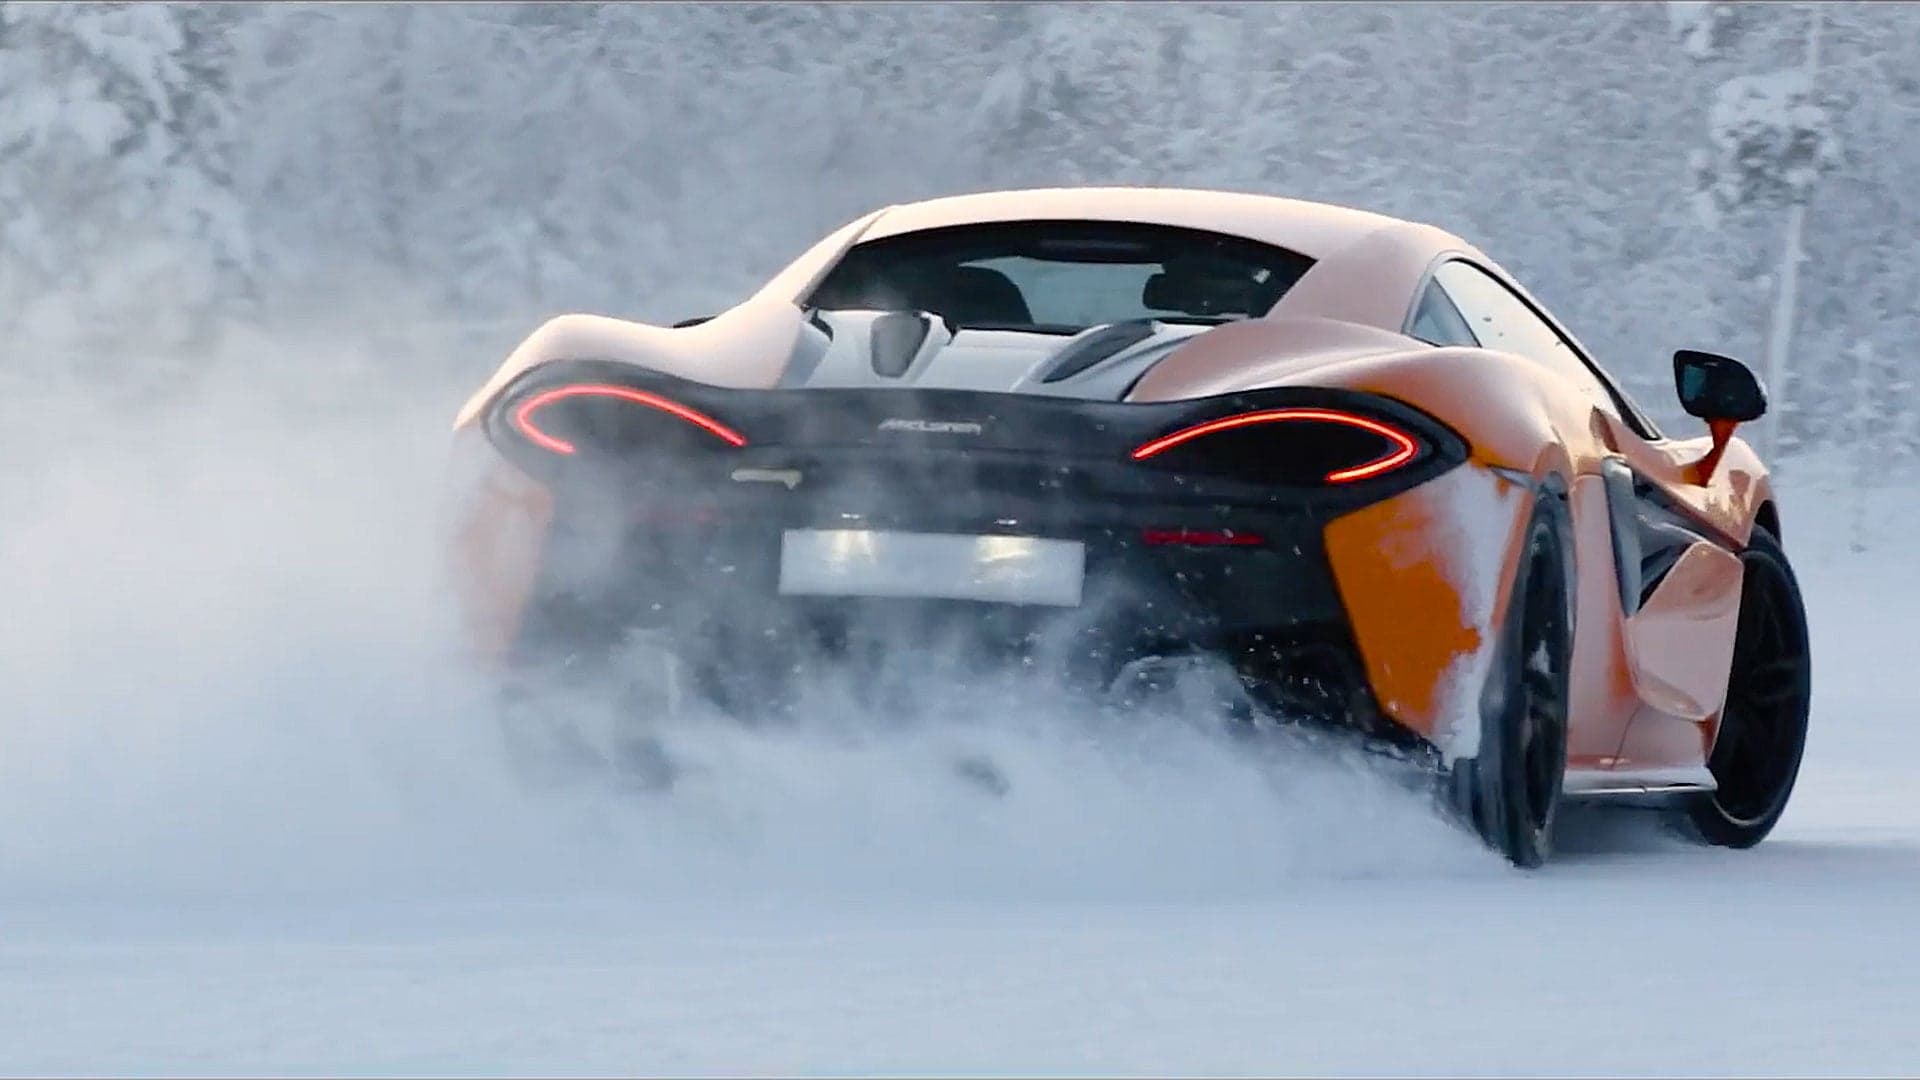 Drifting a McLaren 570S on Ice Looks Like Winter Bliss